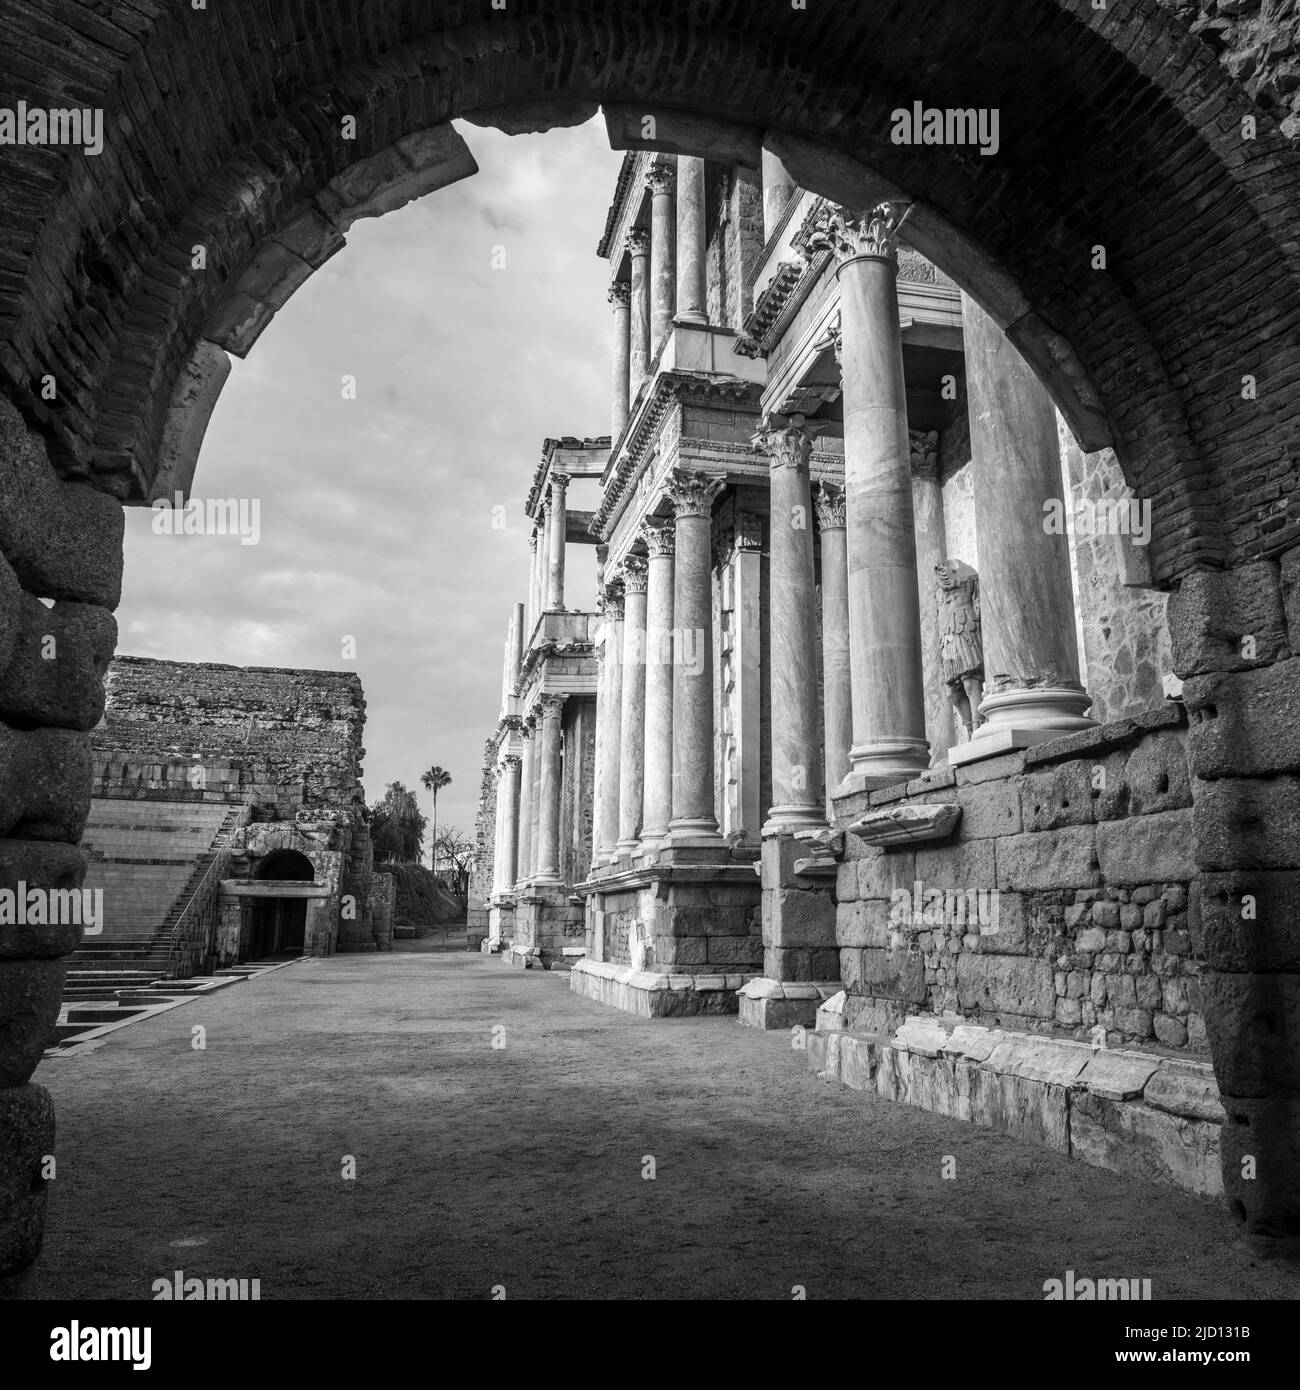 The Roman Theatre of Merida in Merida, Spain Stock Photo